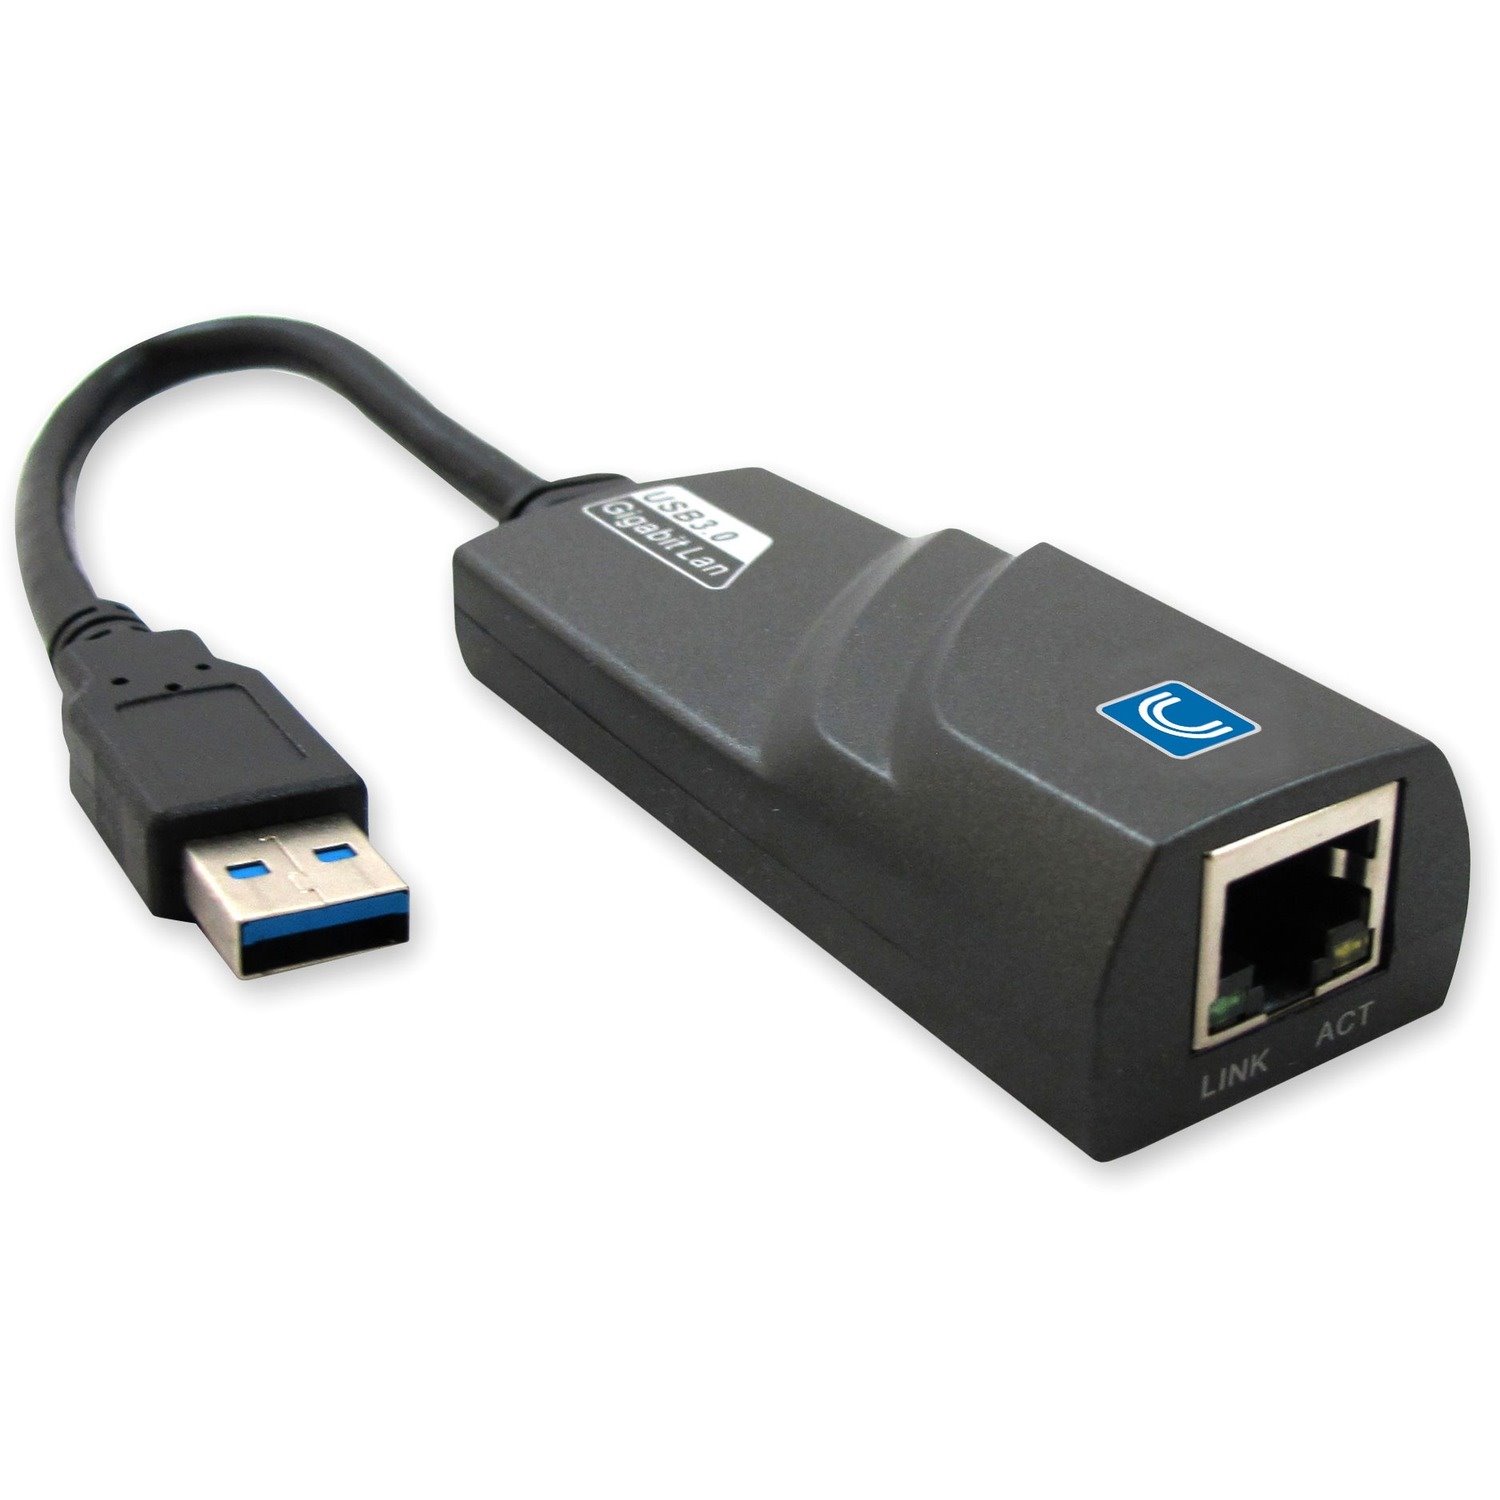 Comprehensive USB 3.0 to Gigabit Ethernet Dongle Adapter